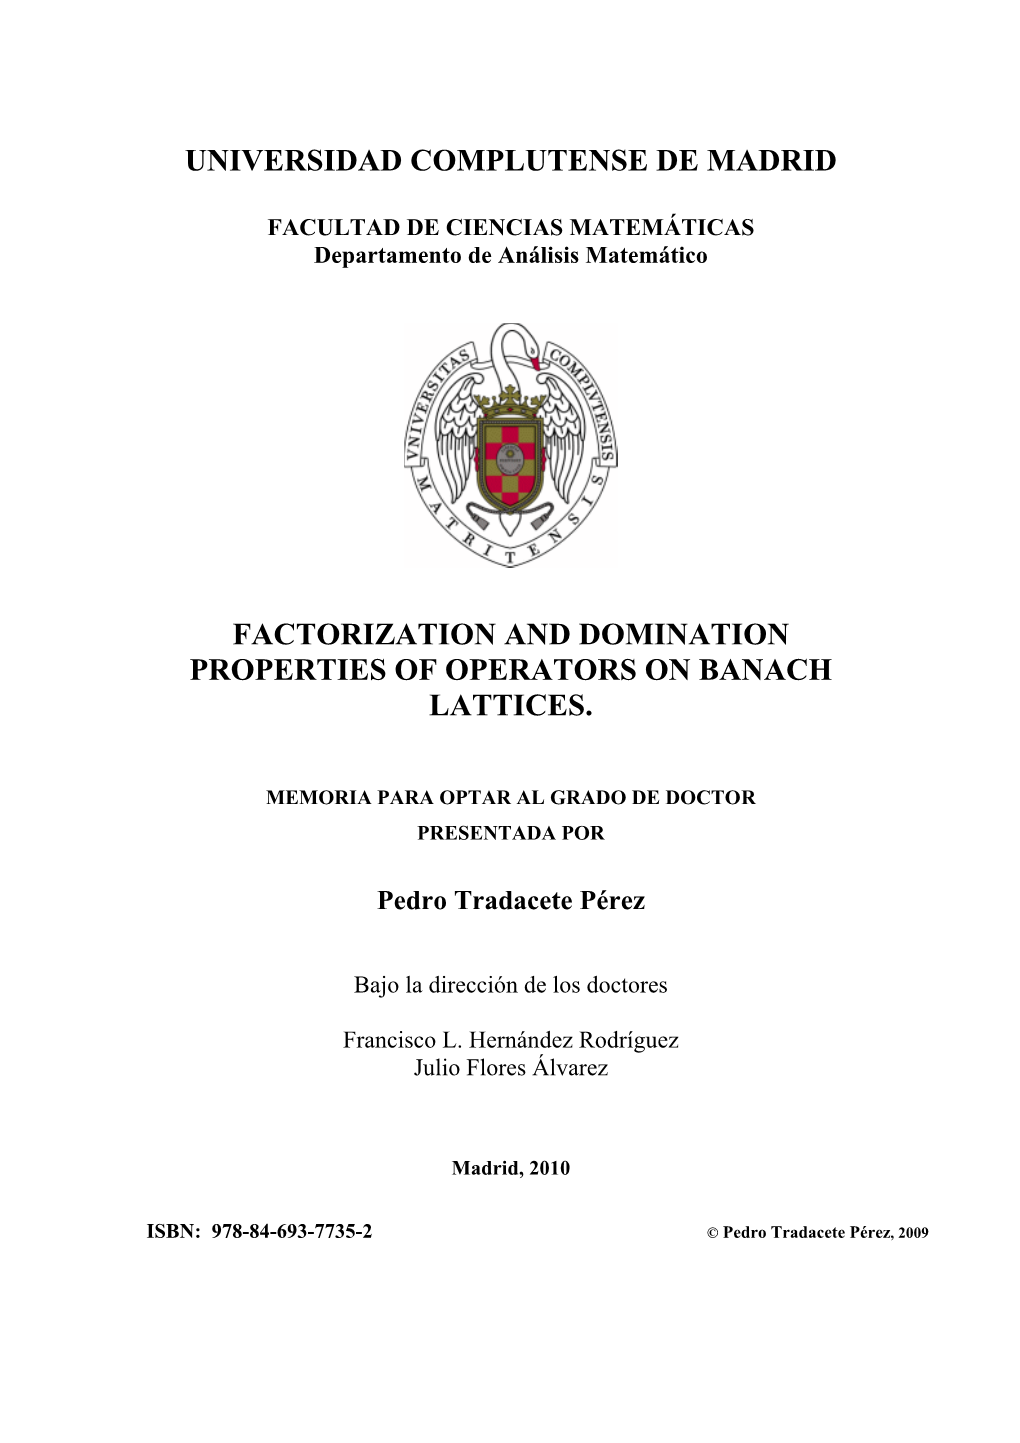 Factorization and Domination Properties of Operators on Banach Lattices